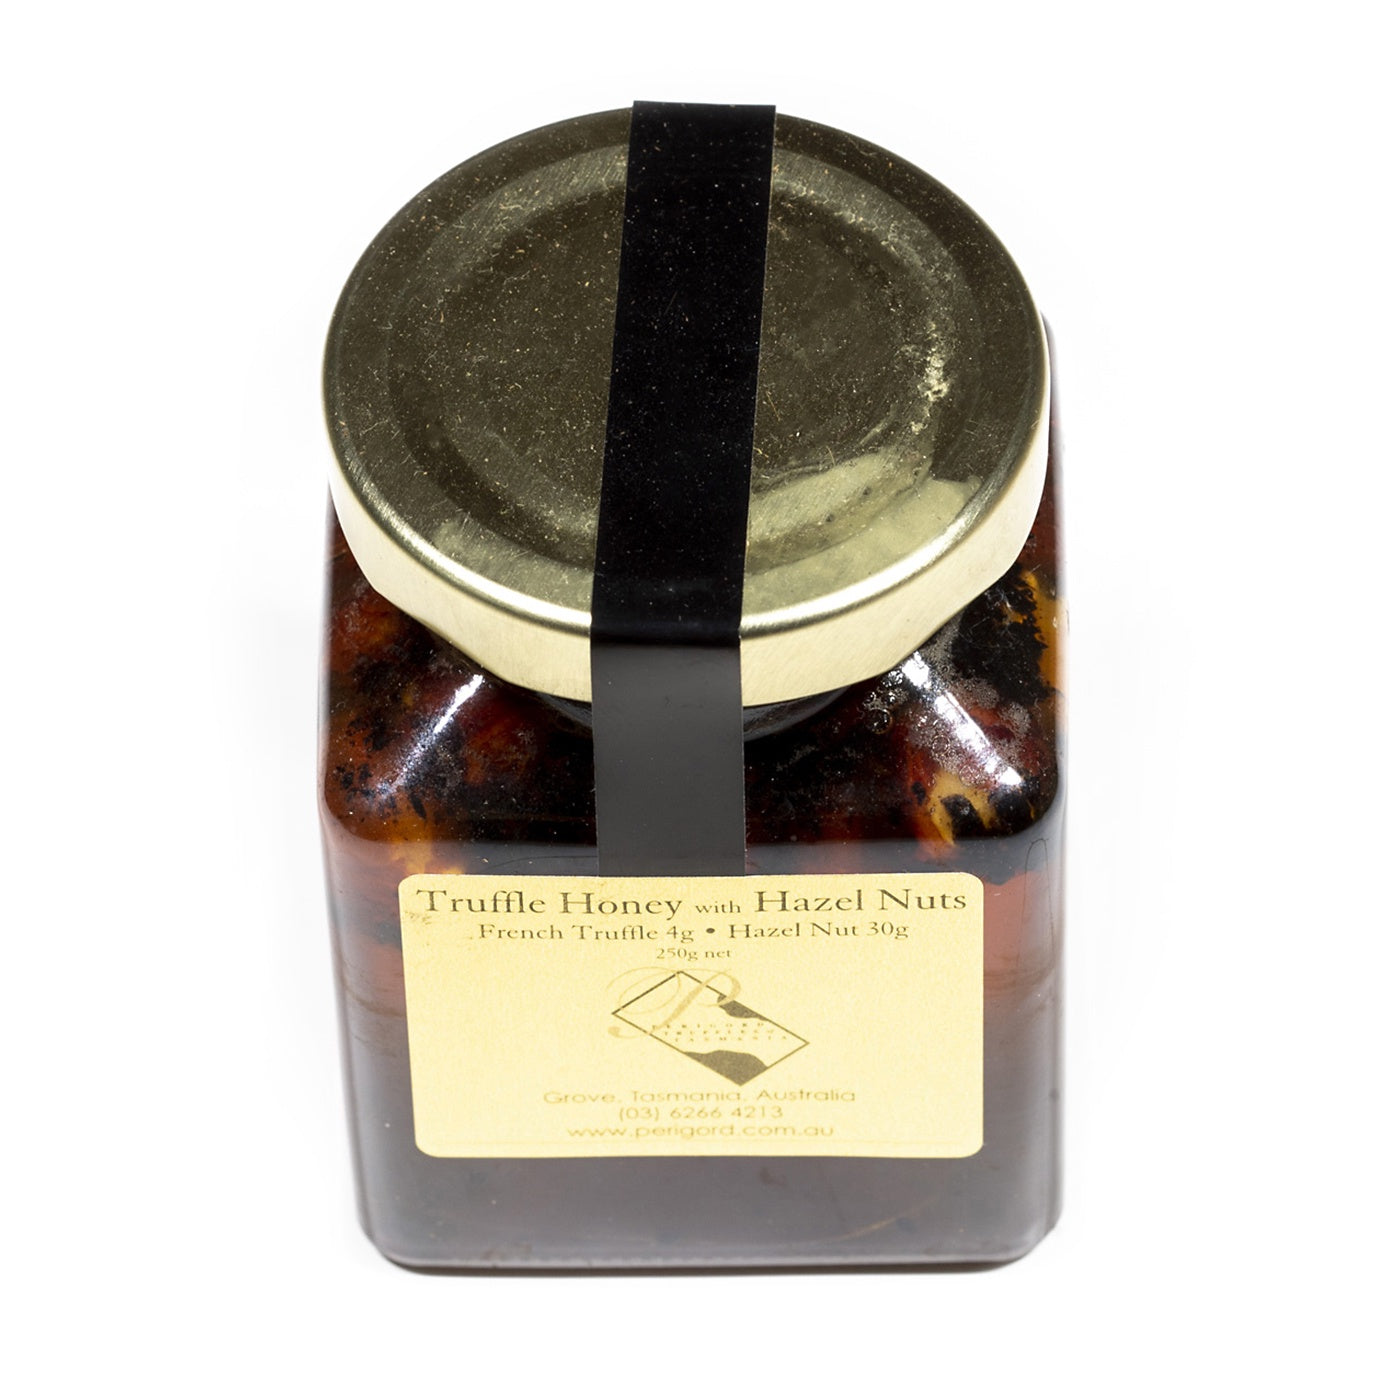 Perigord Truffles of Tasmania - Truffle Honey with Hazelnuts - 250g